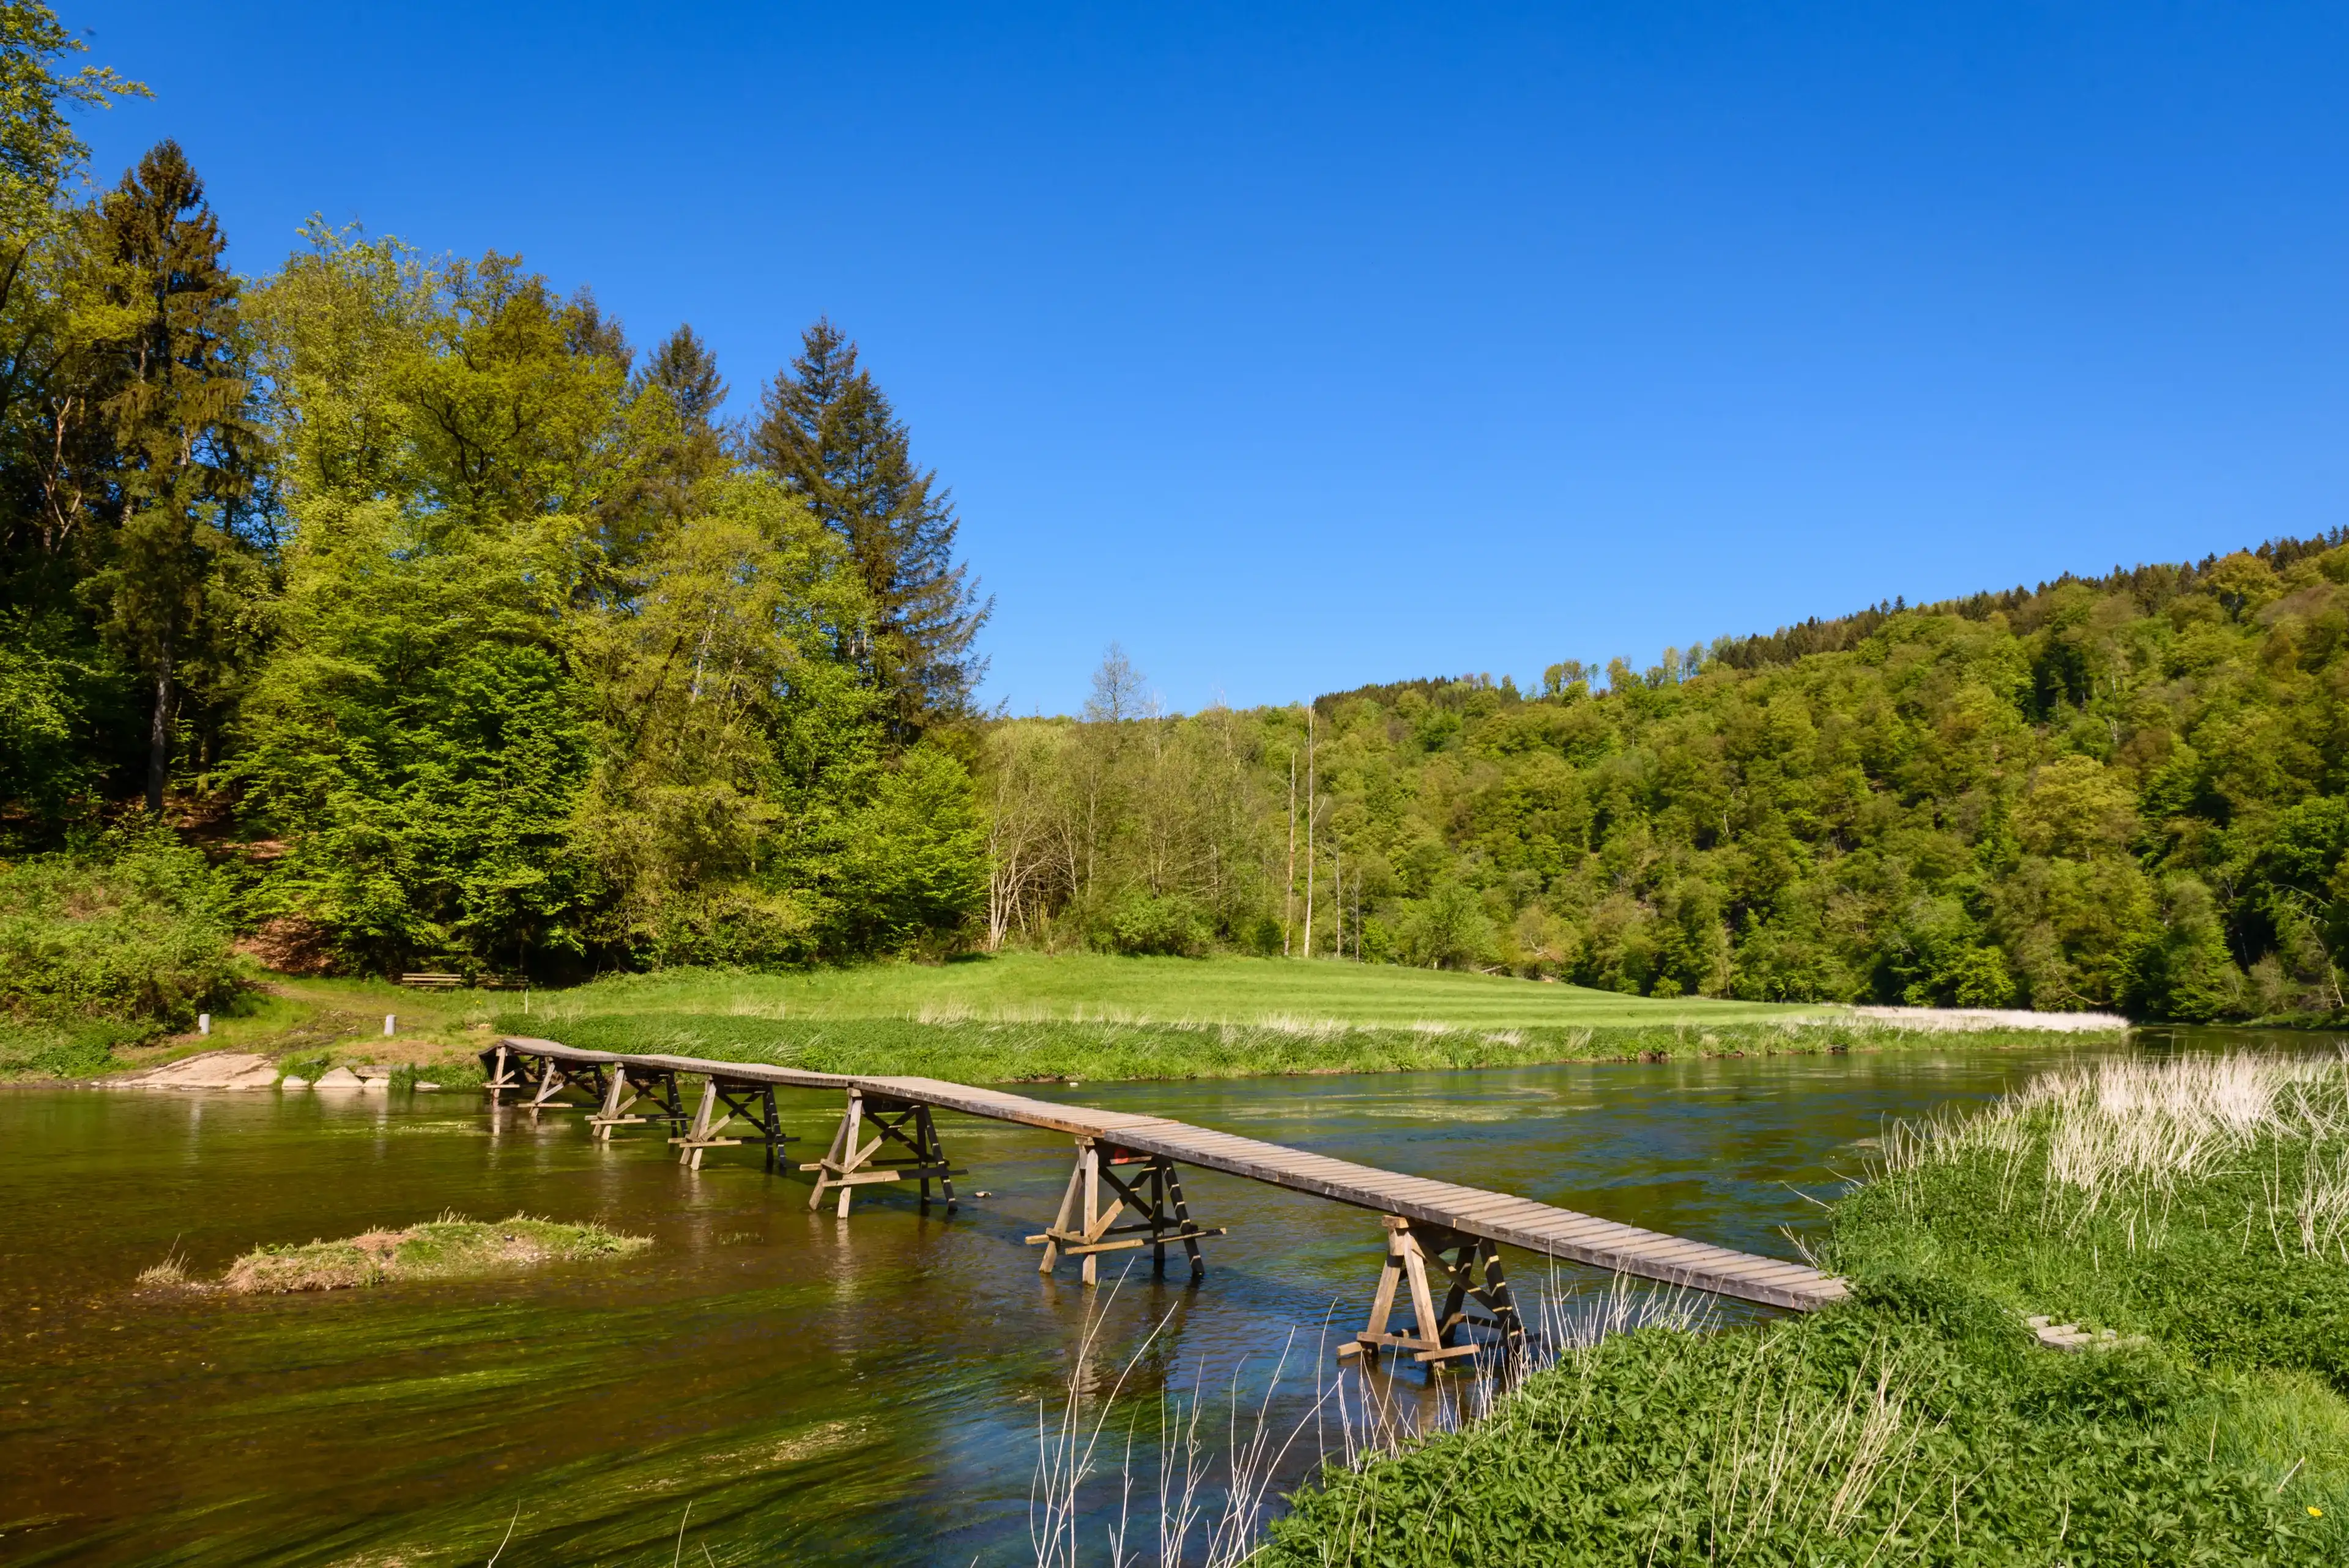 Wooden footbridge across Semois river in Cugnon (Bertrix), Luxembourg province, Ardennes region, Wallonia, Belgium.